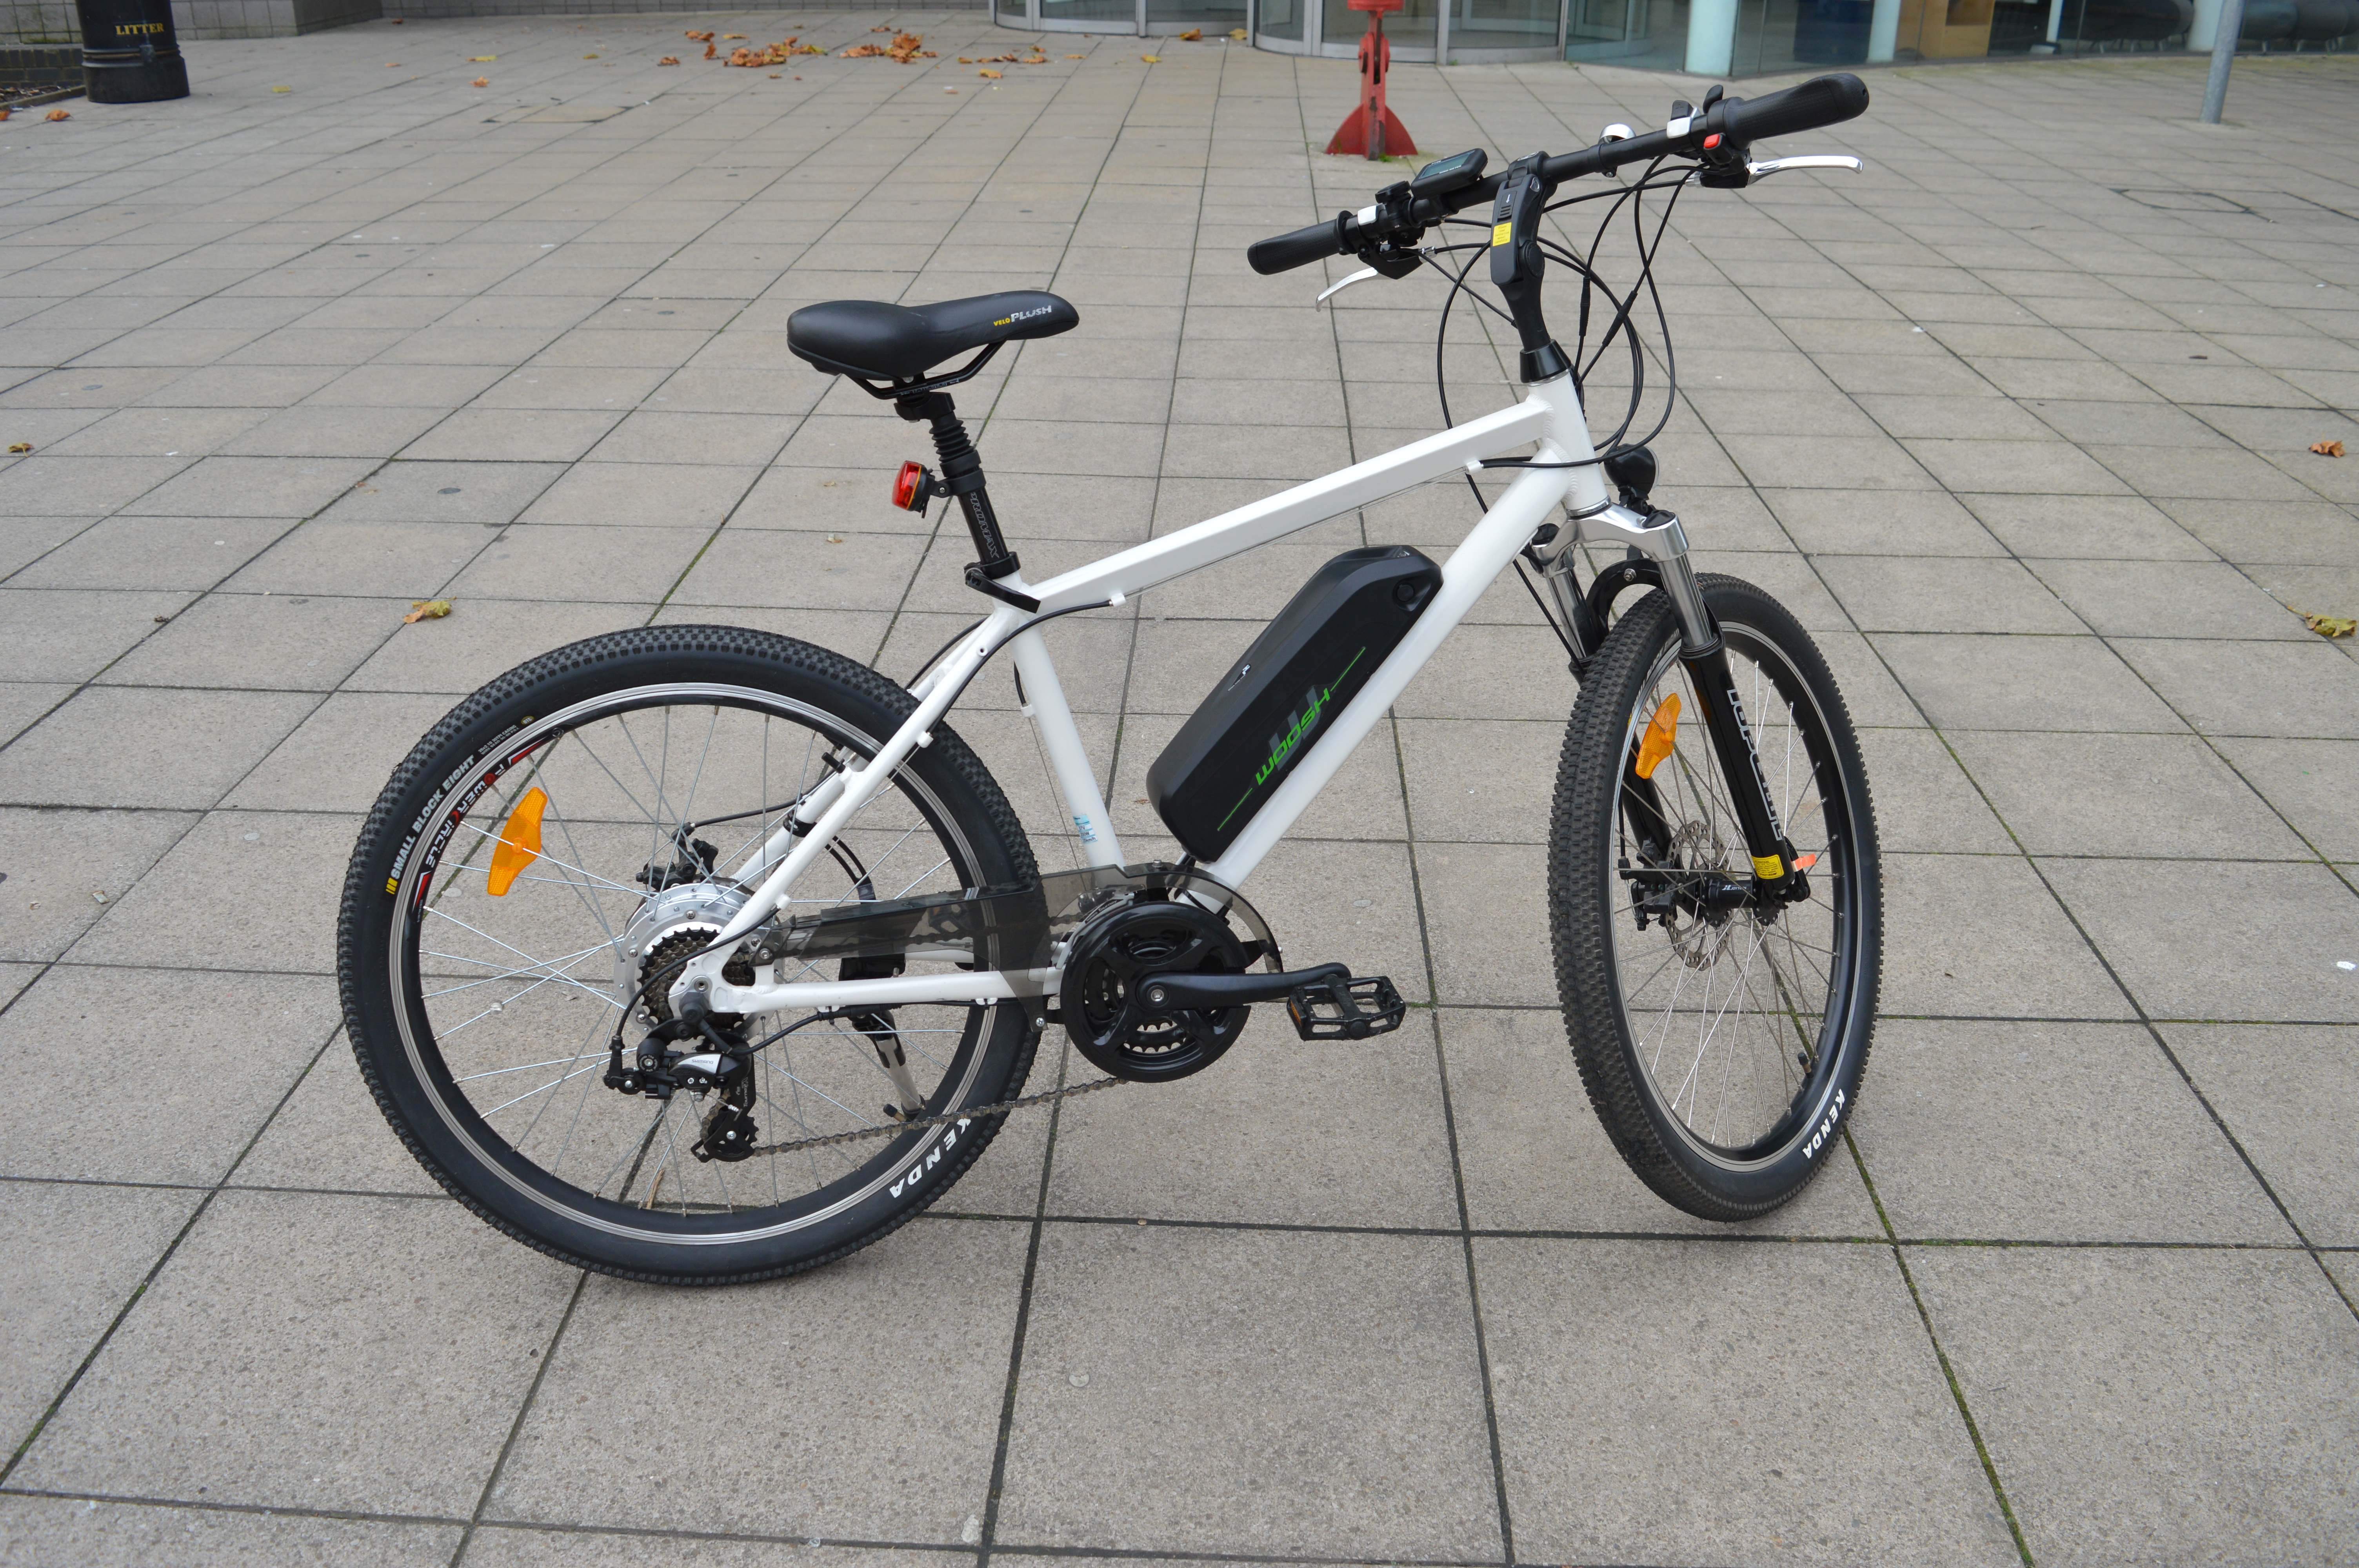 3000w electric bike kit uk